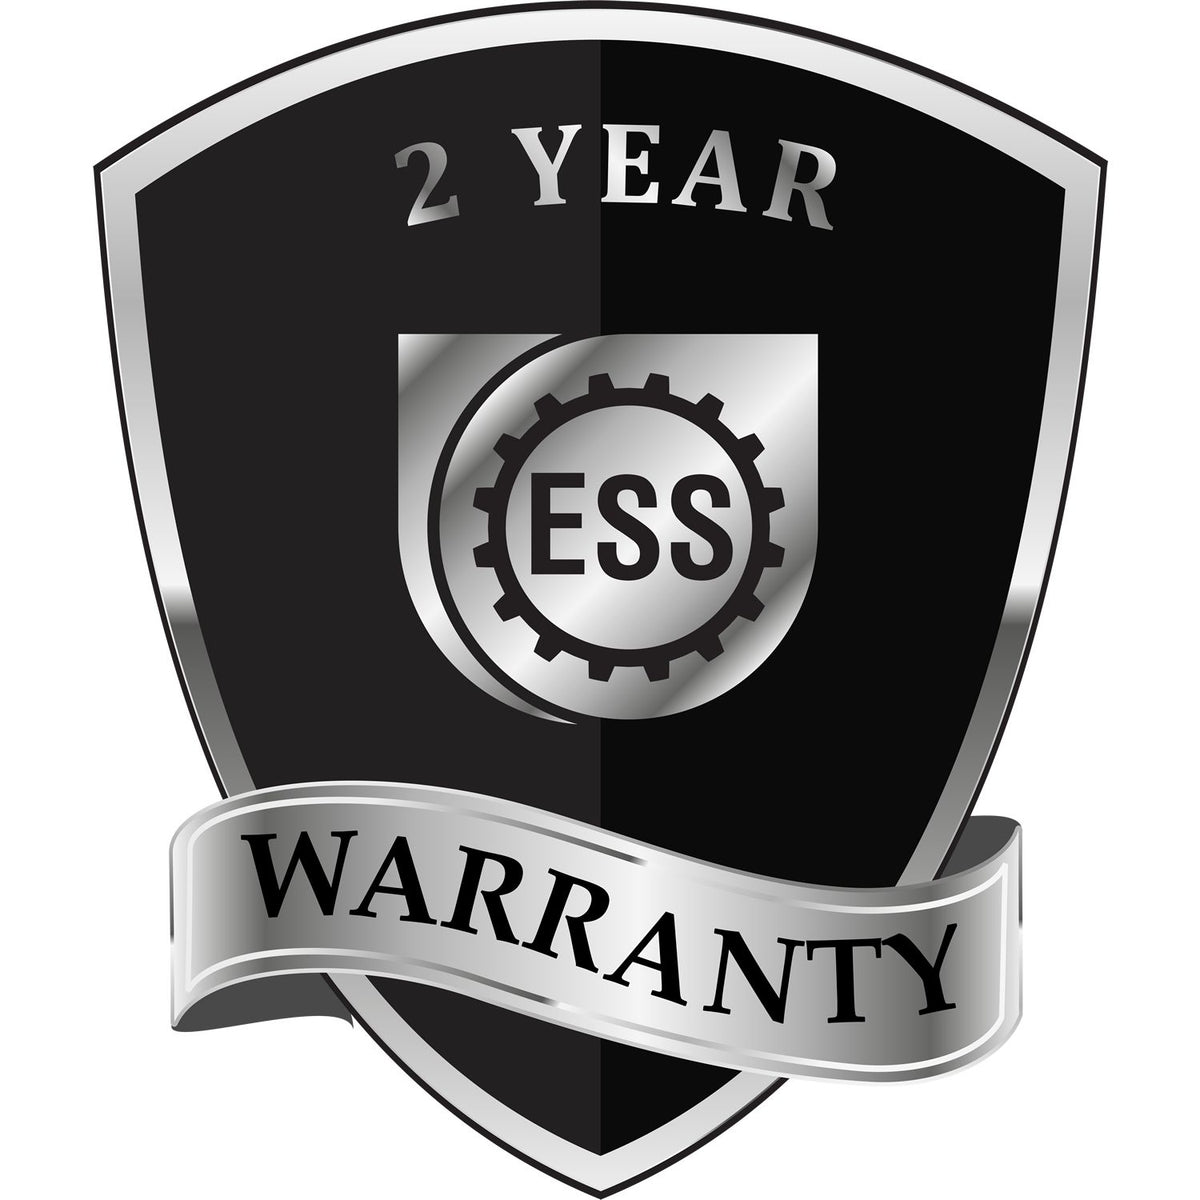 A black and silver badge or emblem showing warranty information for the Hybrid Maryland Landscape Architect Seal